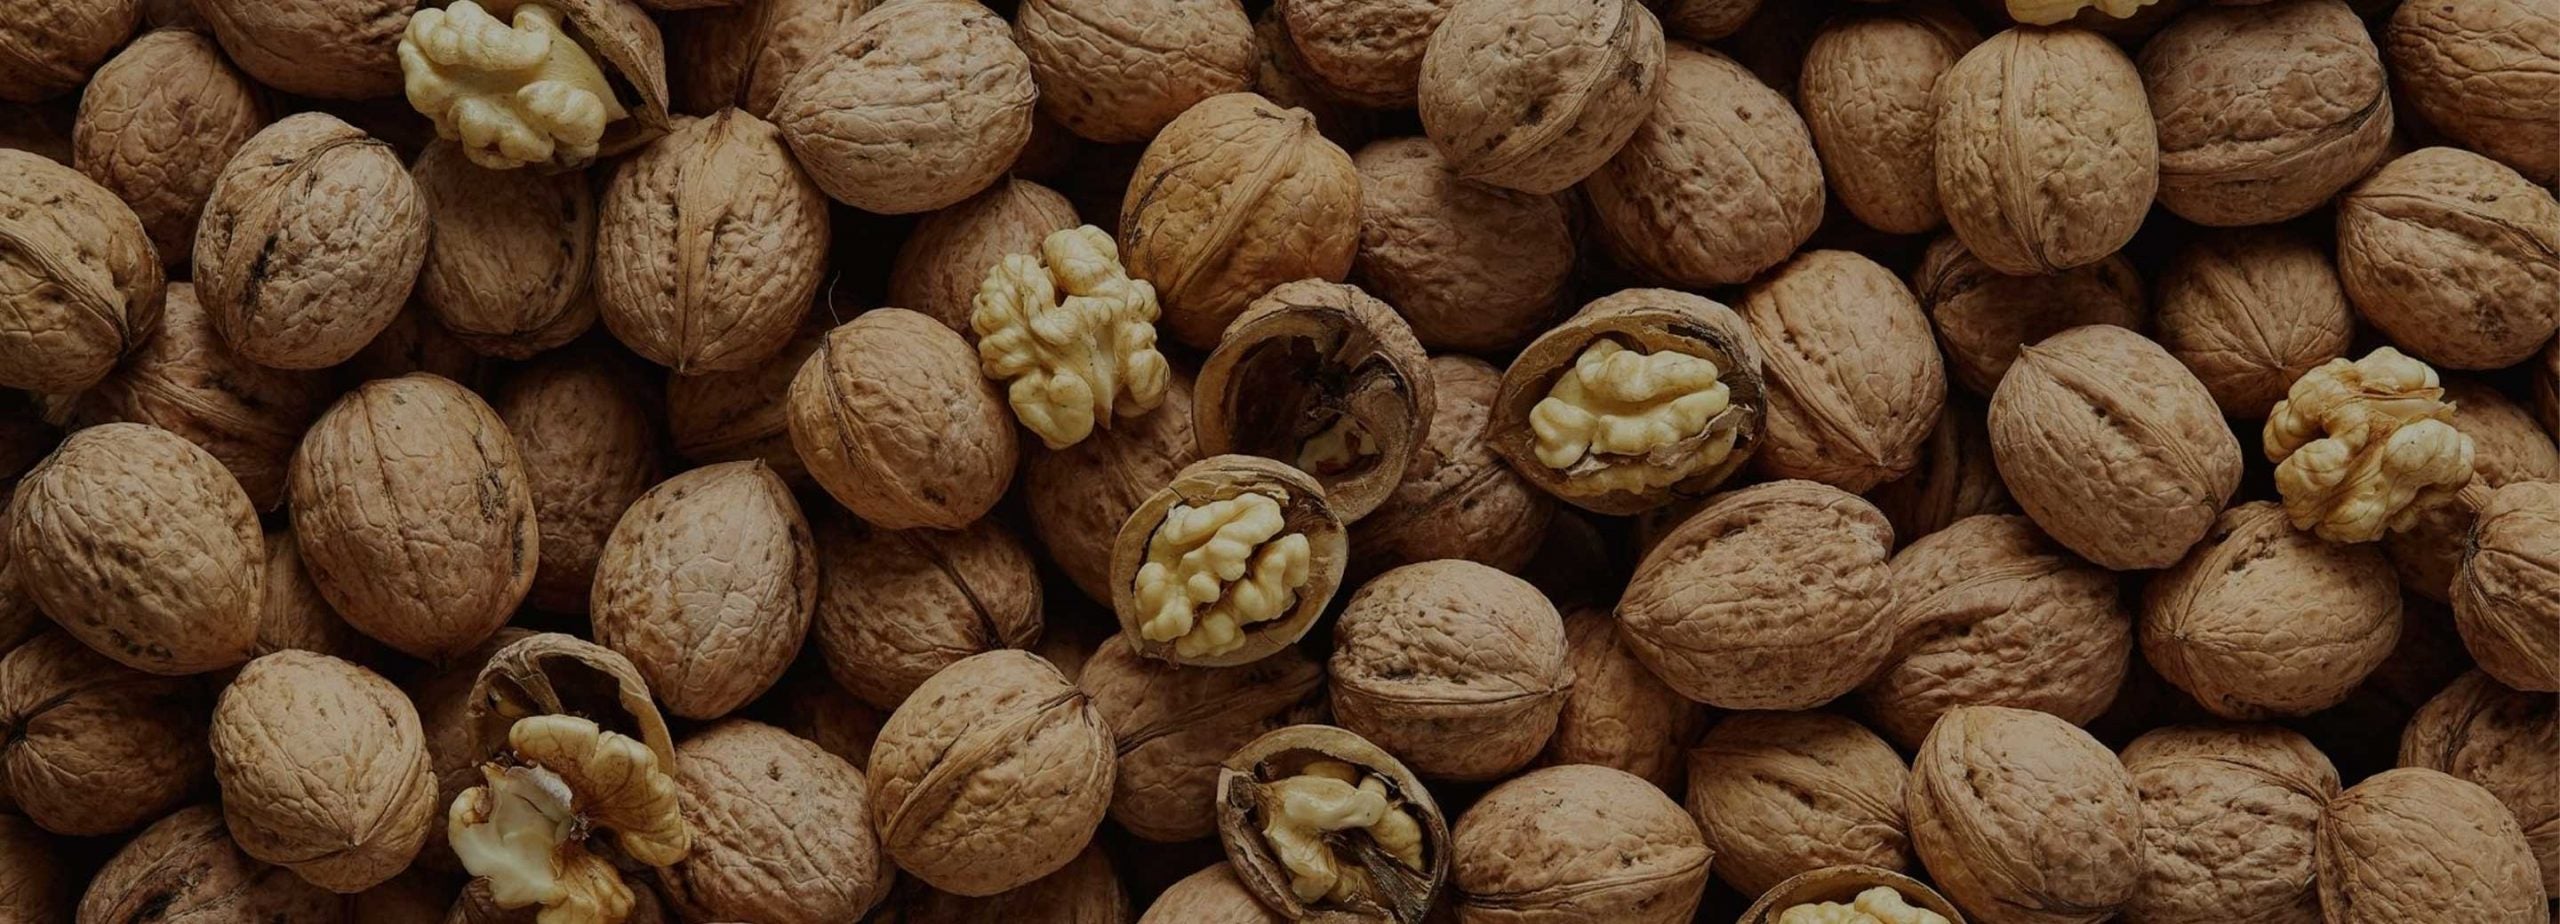 walnut shell benefits